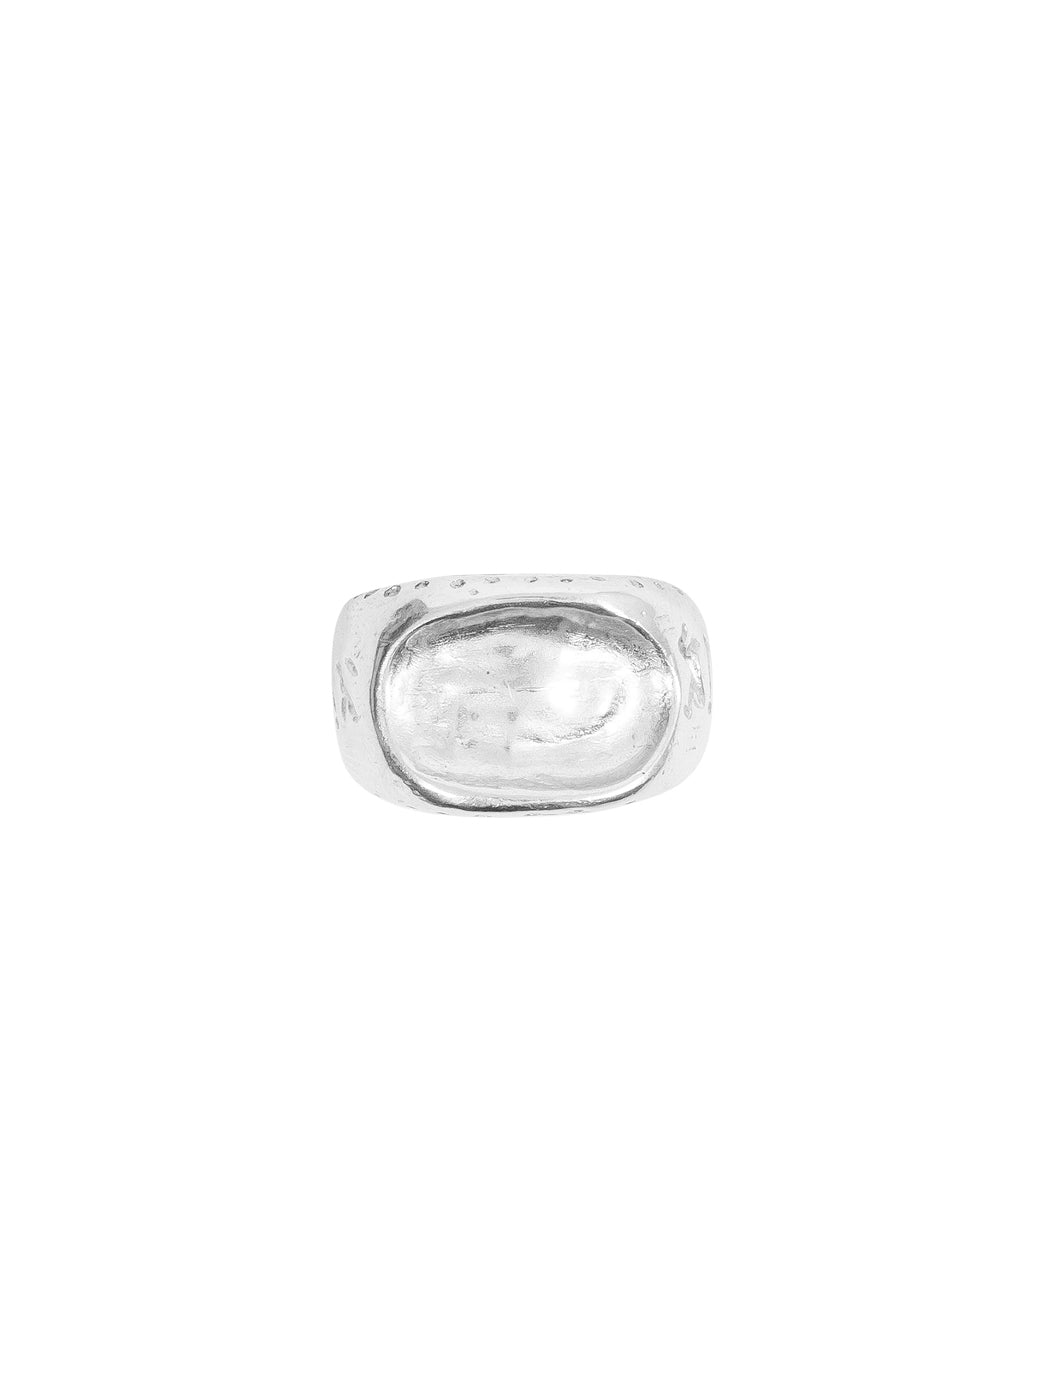 Fiorina Jewellery Men's Roman Numeral Ring Top